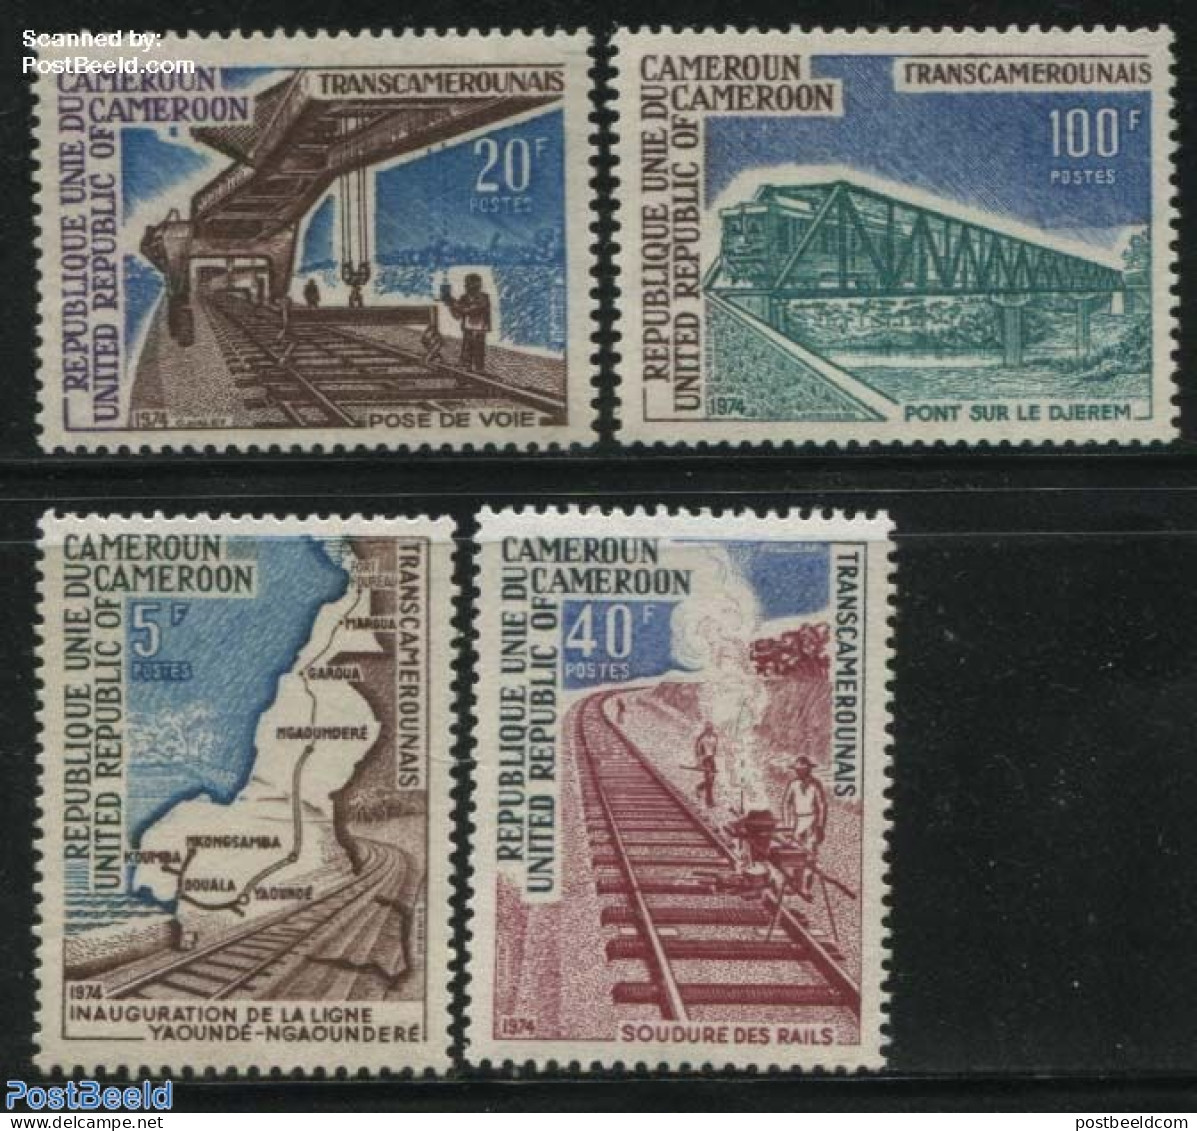 Cameroon 1974 Transcameroun Railway 4v, Mint NH, Transport - Various - Railways - Maps - Art - Bridges And Tunnels - Trains